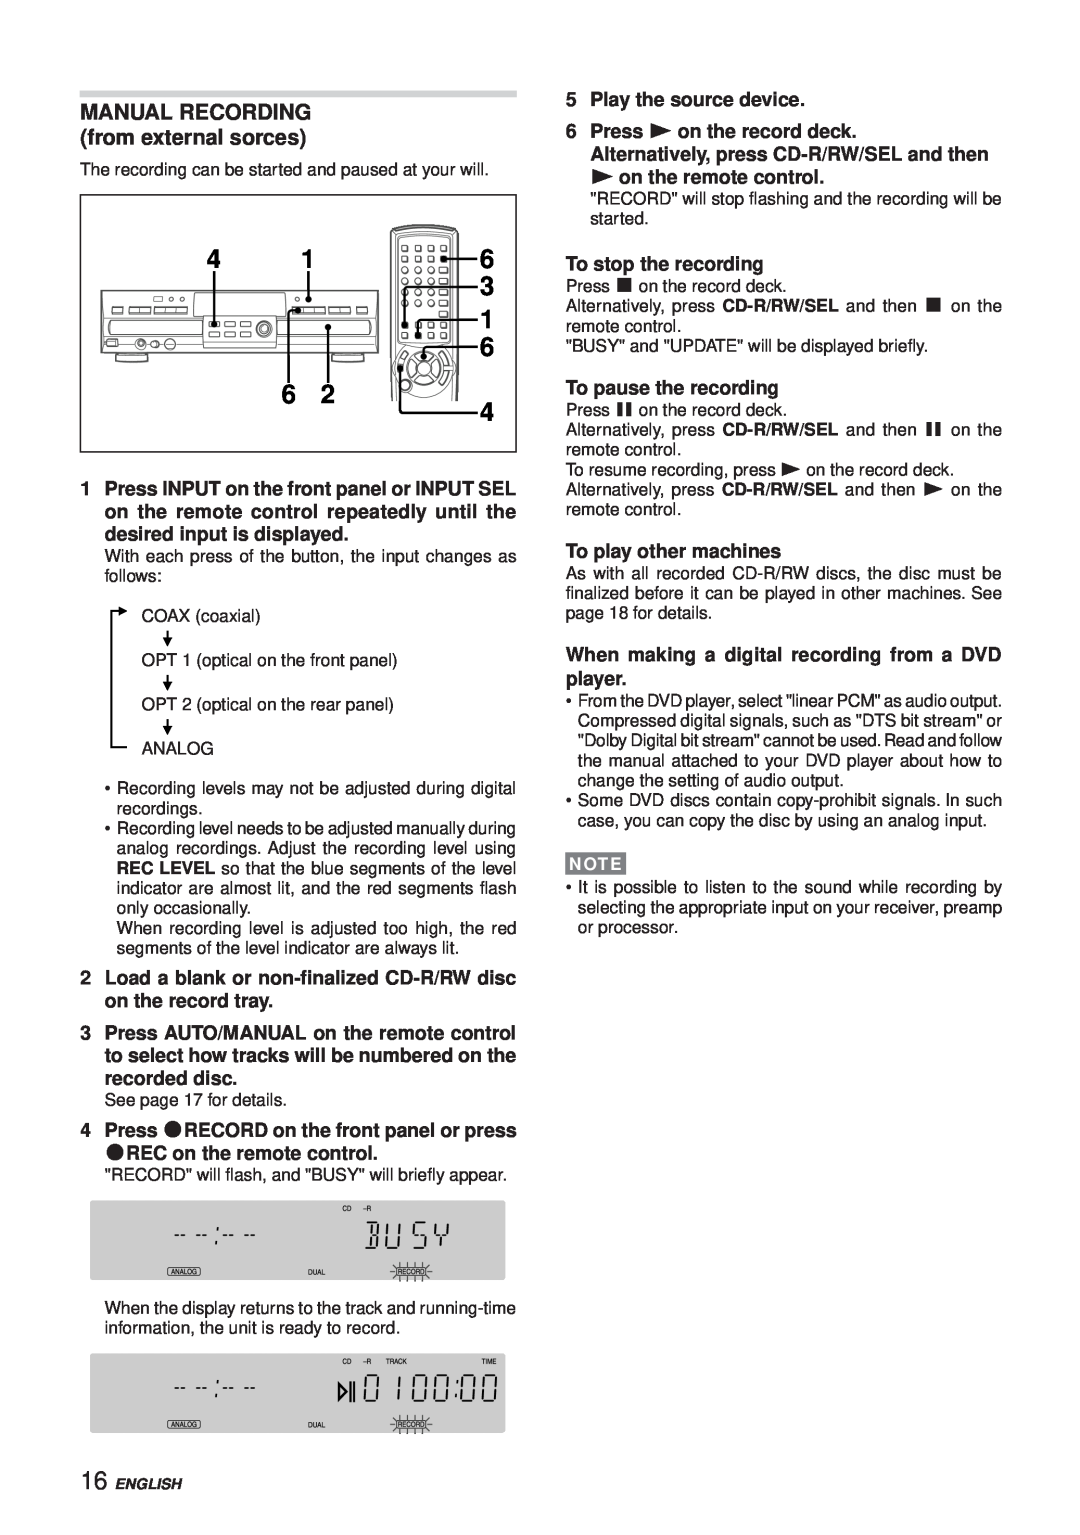 Aiwa XC-RW700 manual MANUAL RECORDING from external sorces 